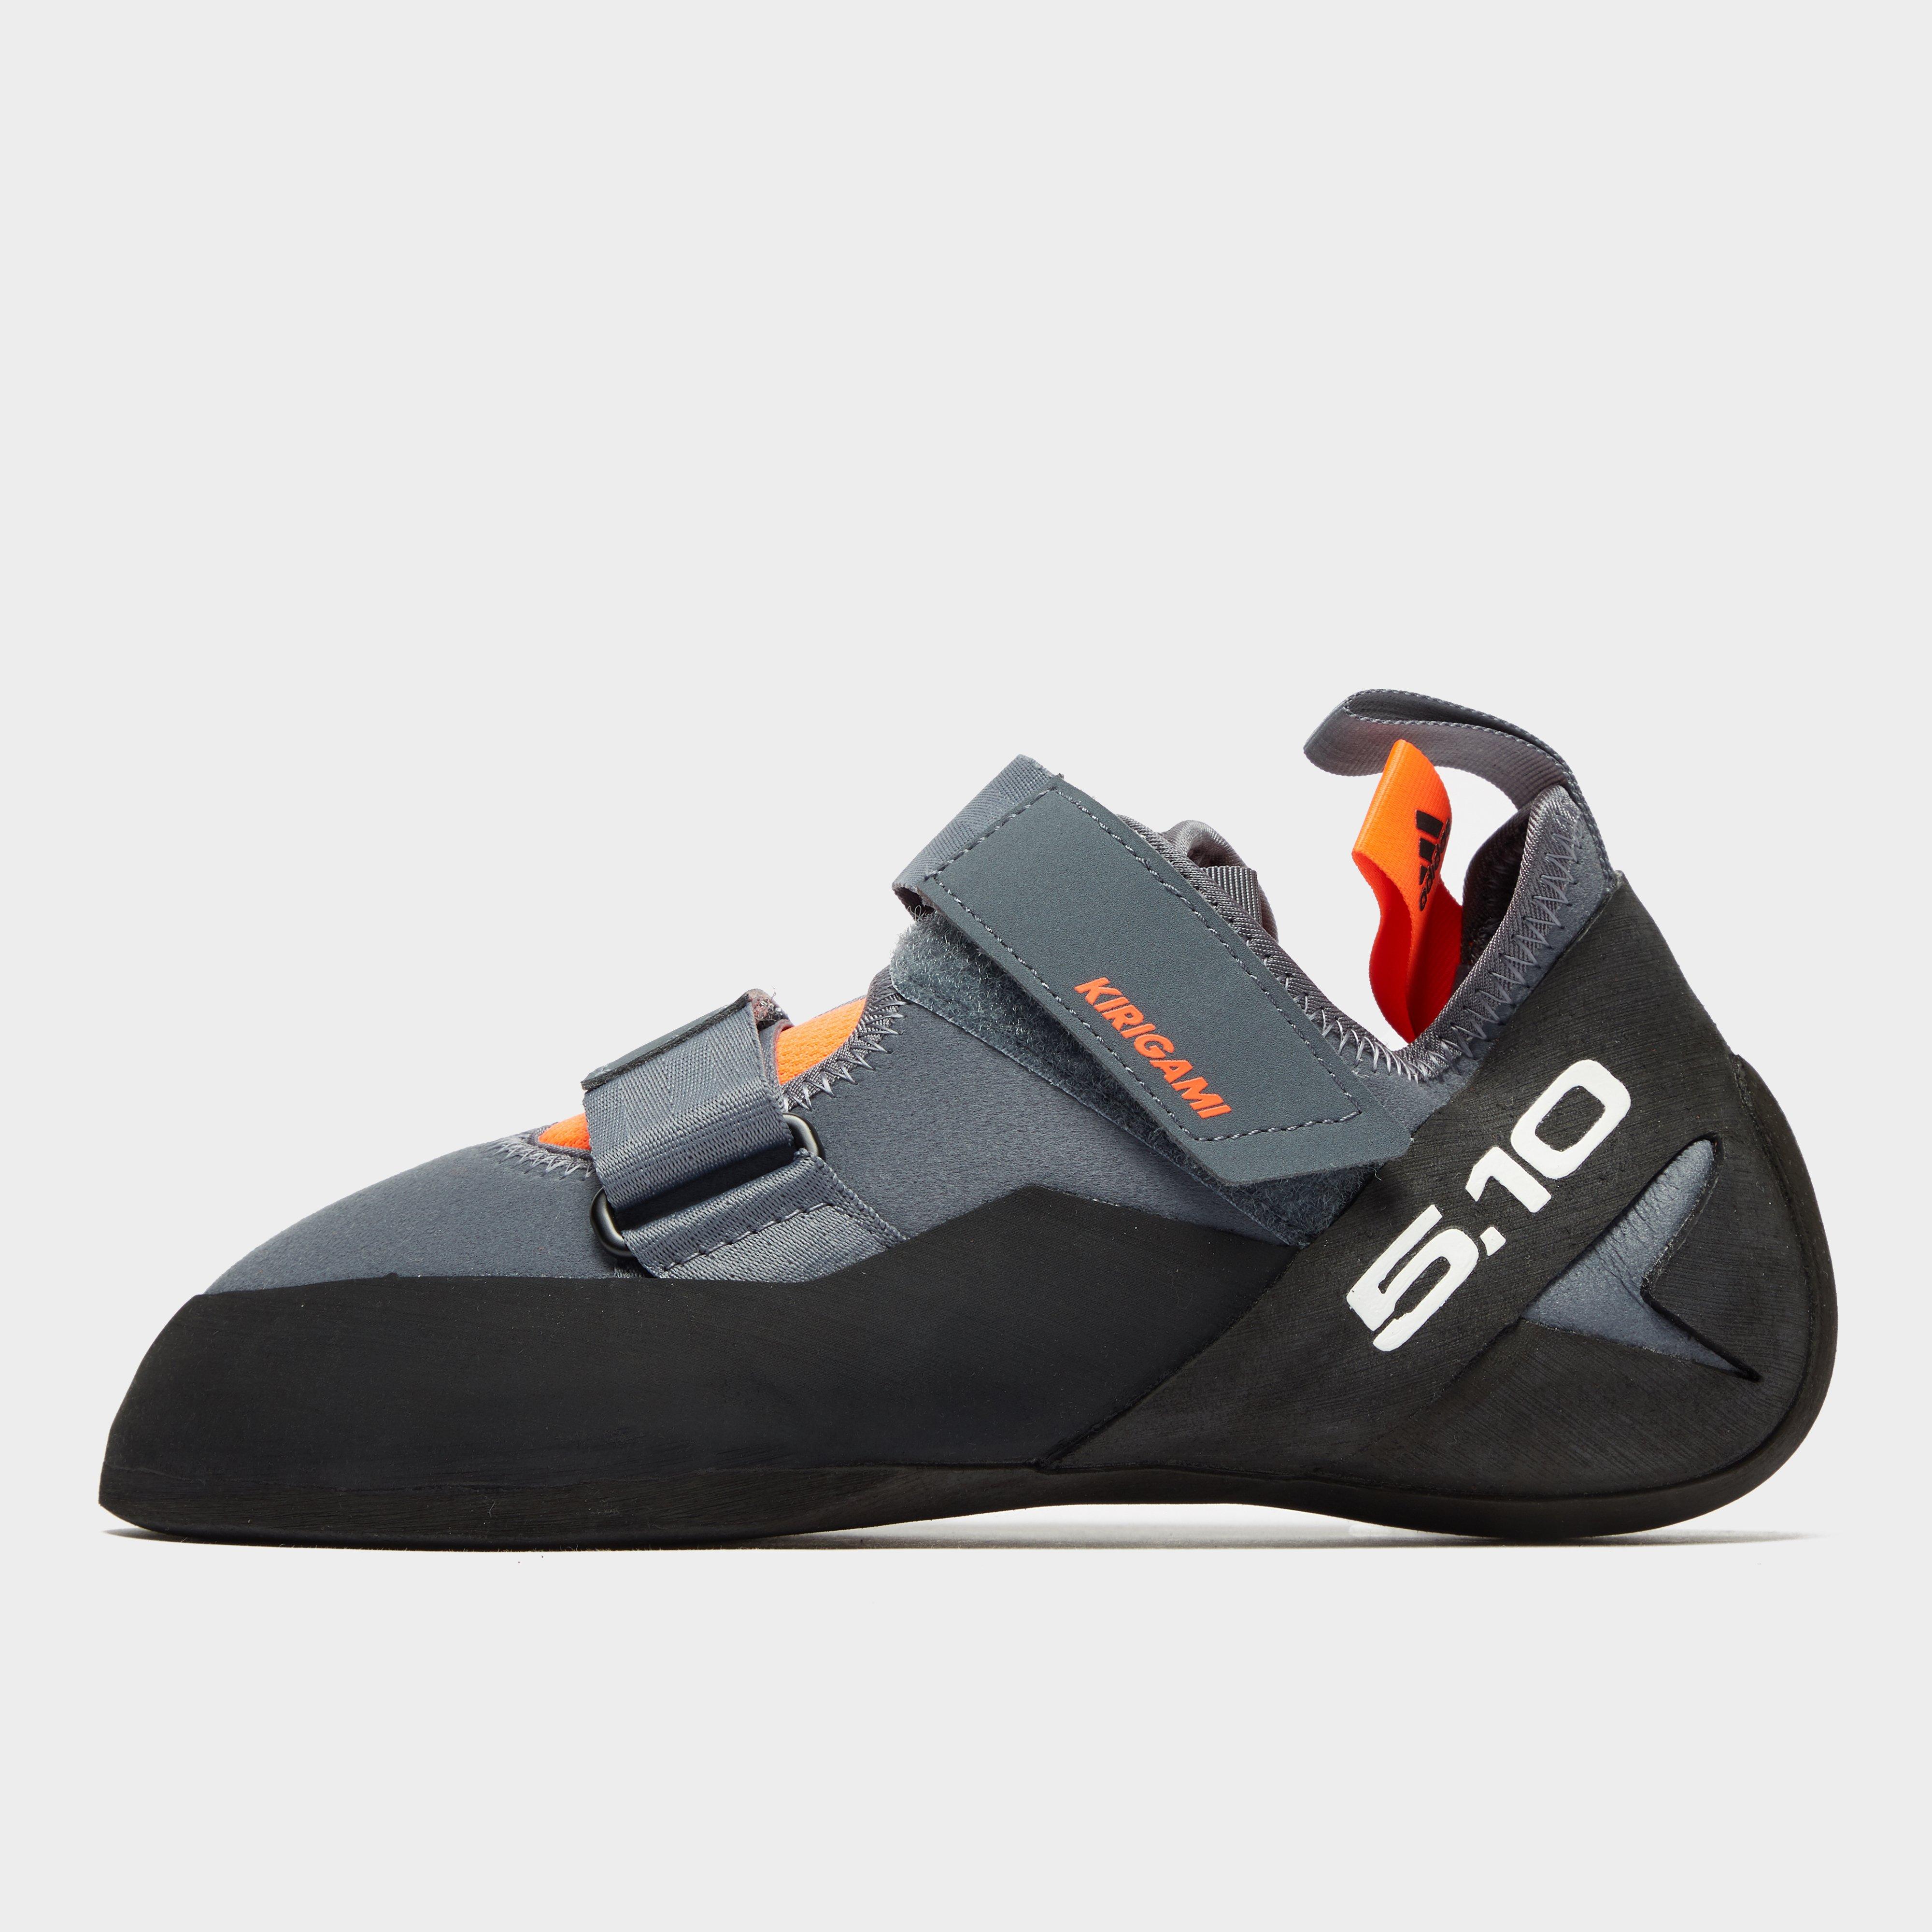 adidas rock climbing shoes